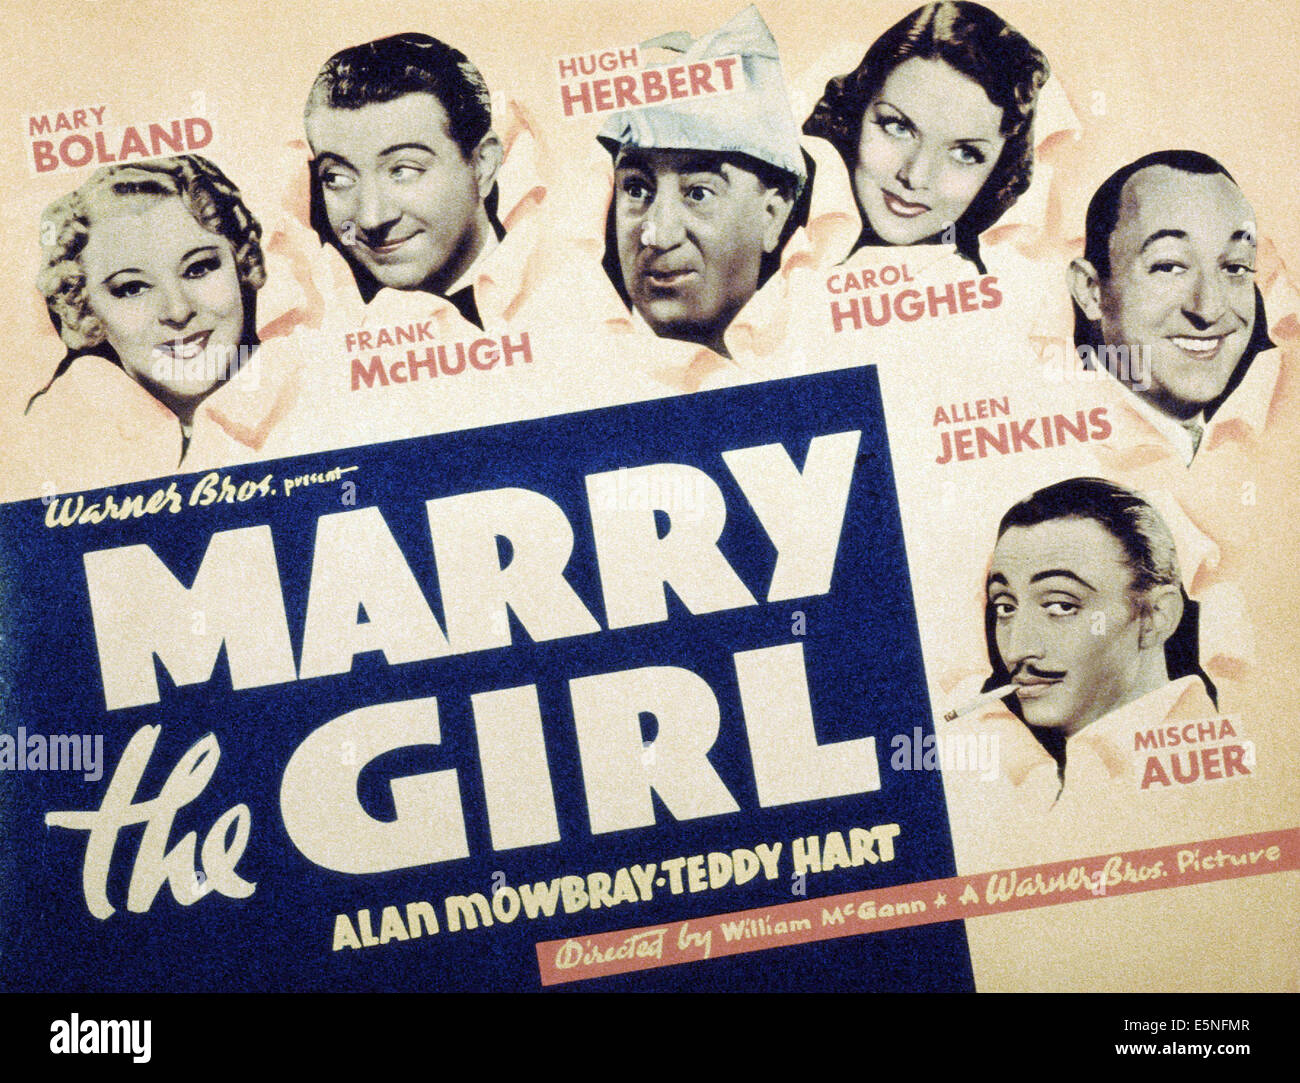 MARRY THE GIRL, from left: Mary Boland, Frank McHugh, Hugh Herbert, Carol Hughes, Allen Jenkins, Mischa Auer (bottom), 1937 Stock Photo